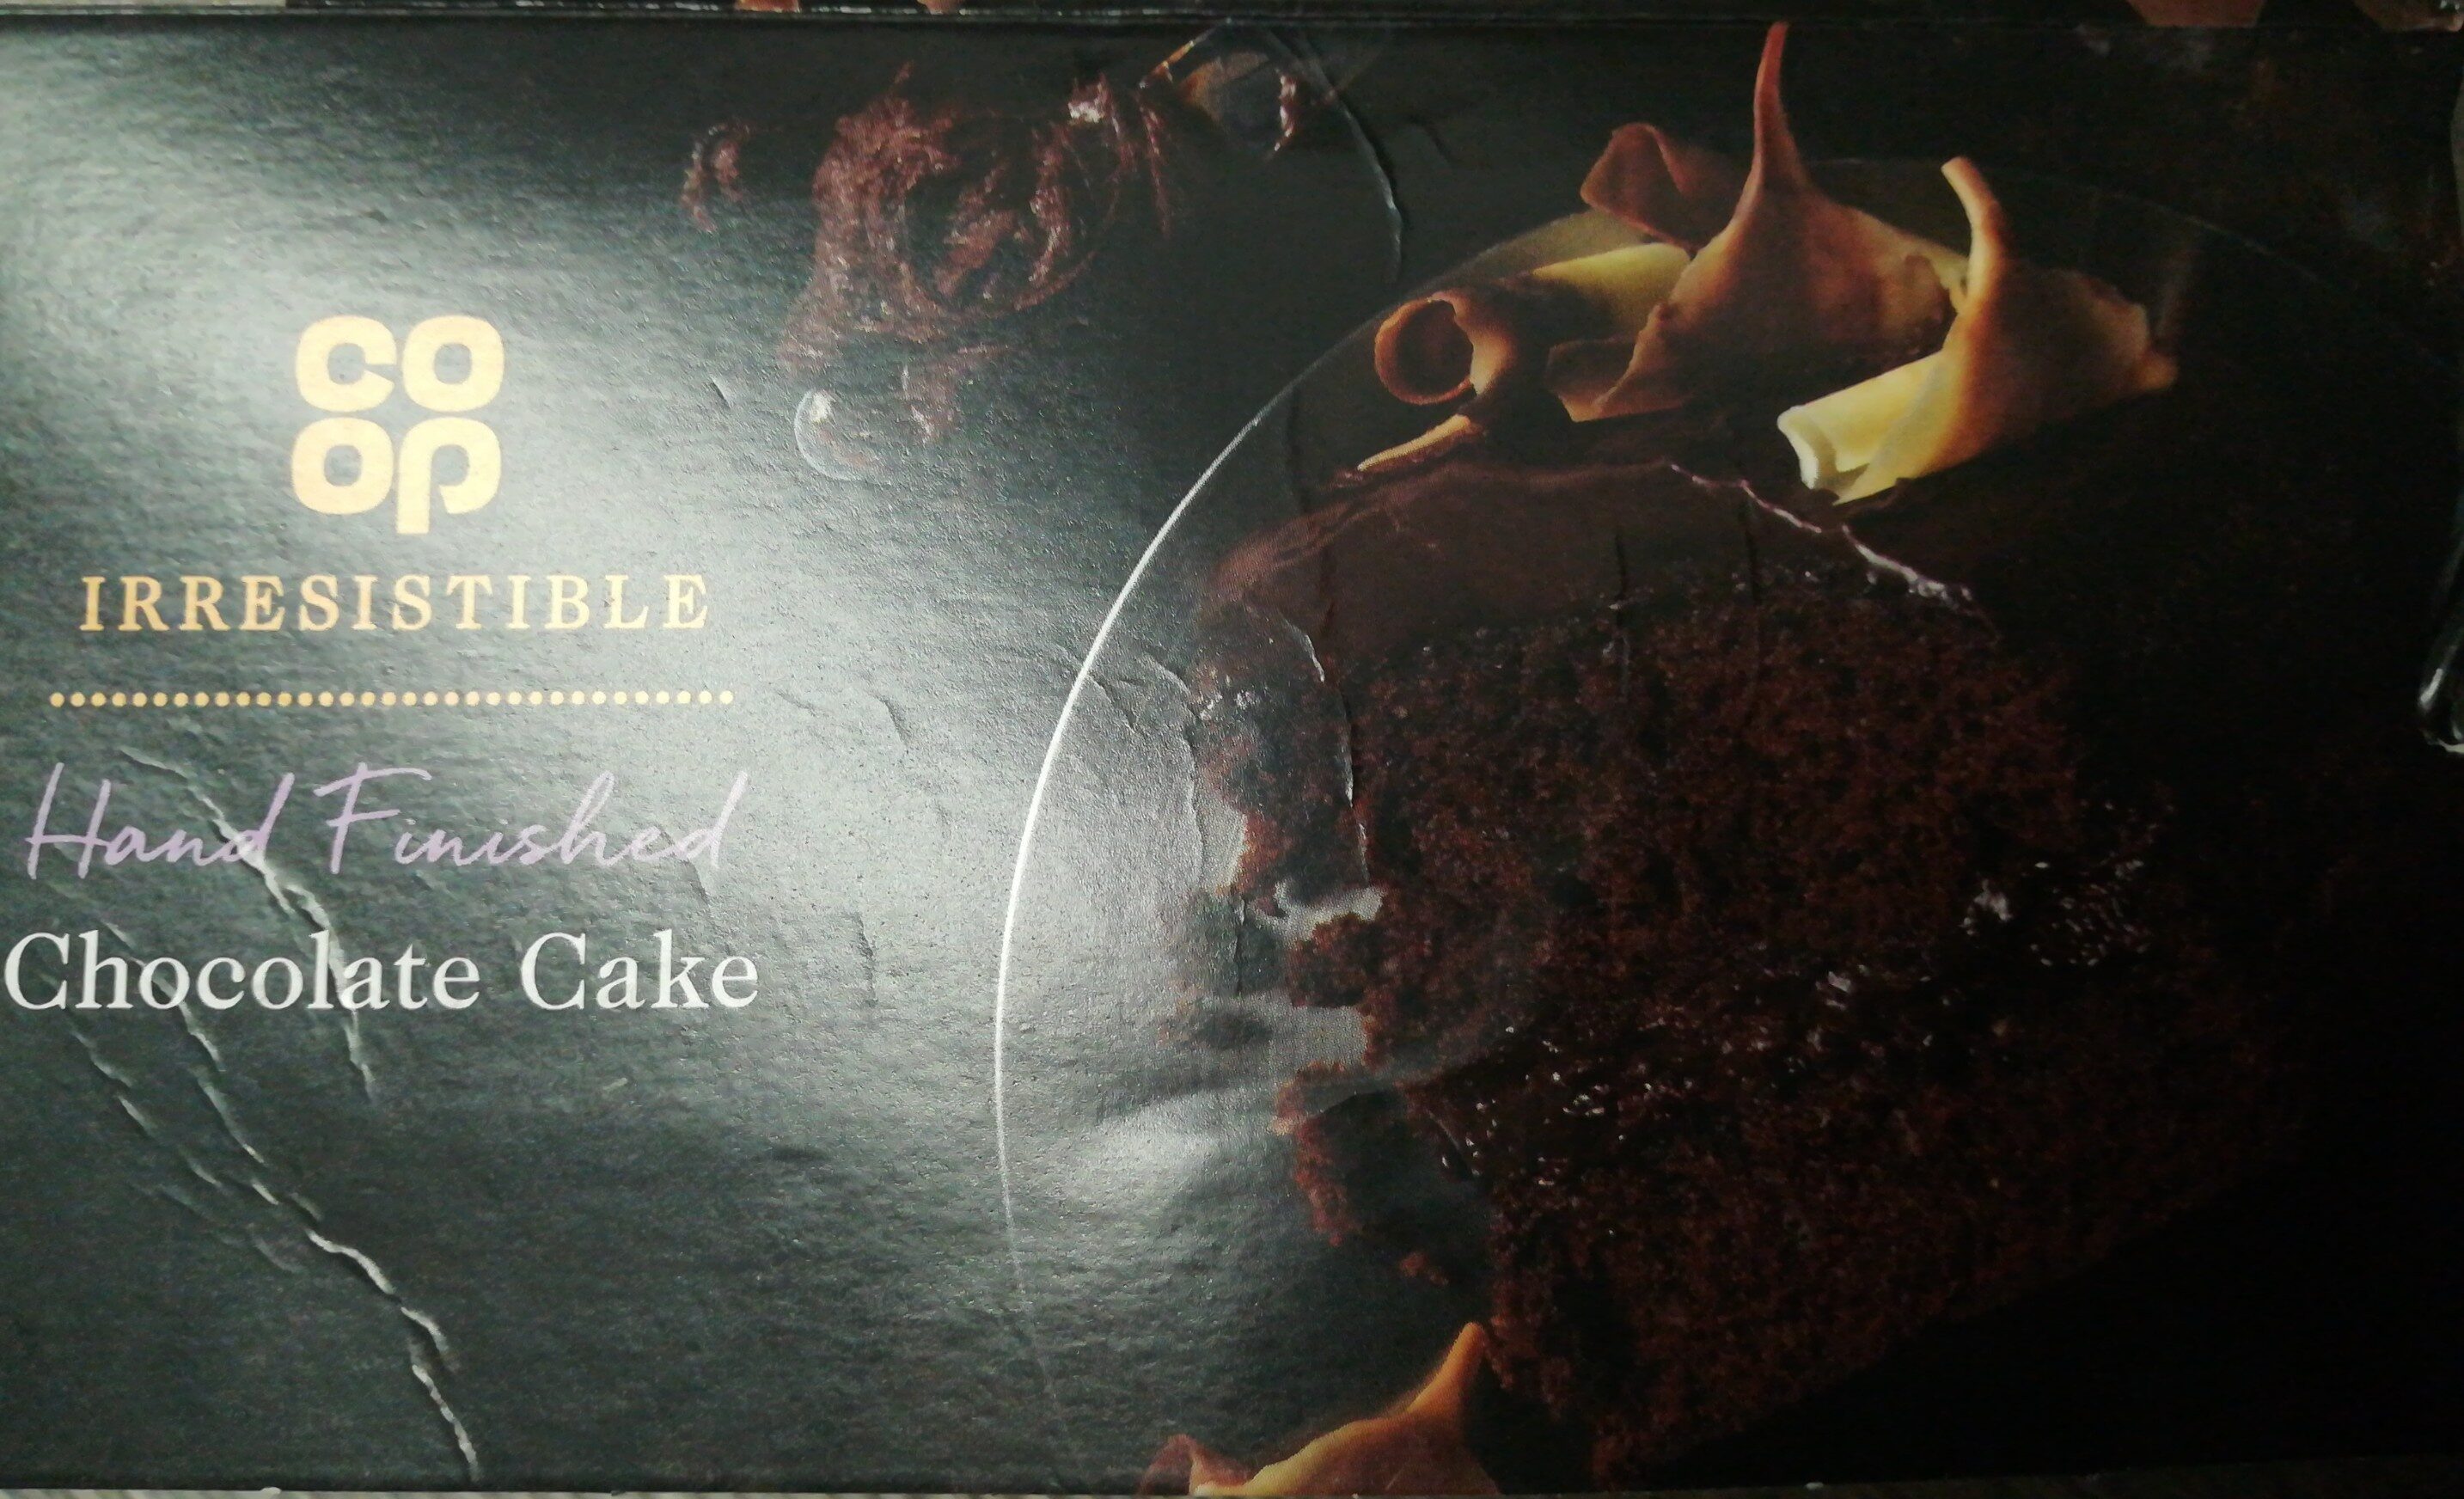 Irresistible chocolate cake - Produkt - en